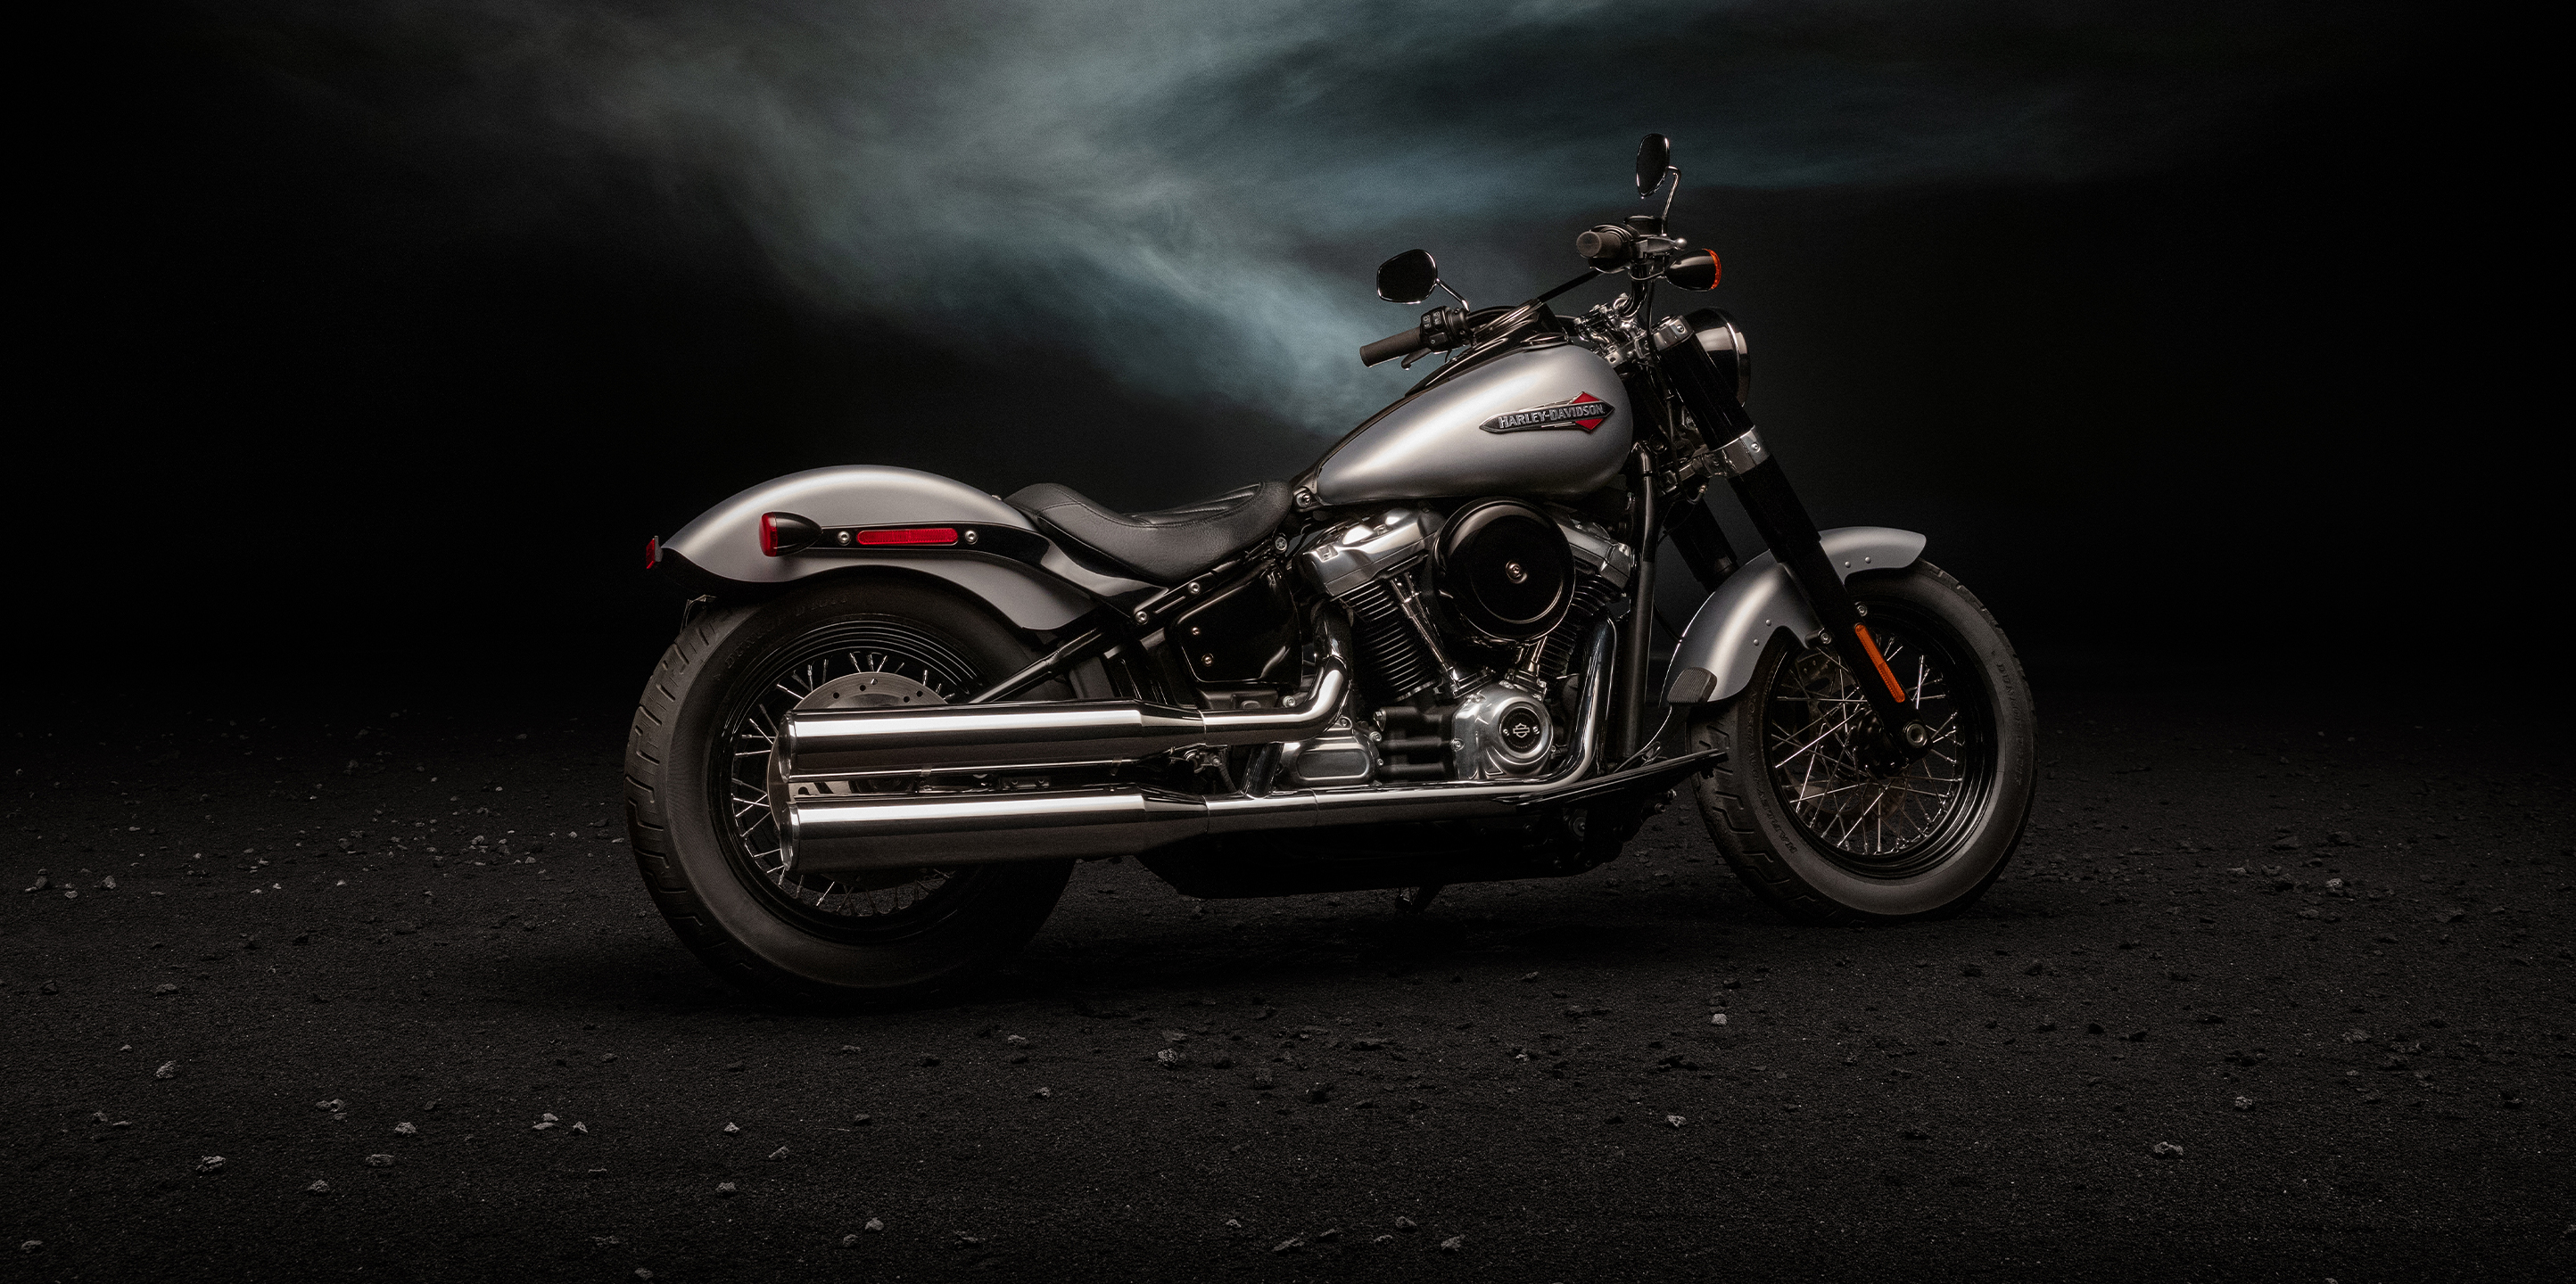 Motocyclette Softail  Slim  2020  Harley  Davidson  Canada